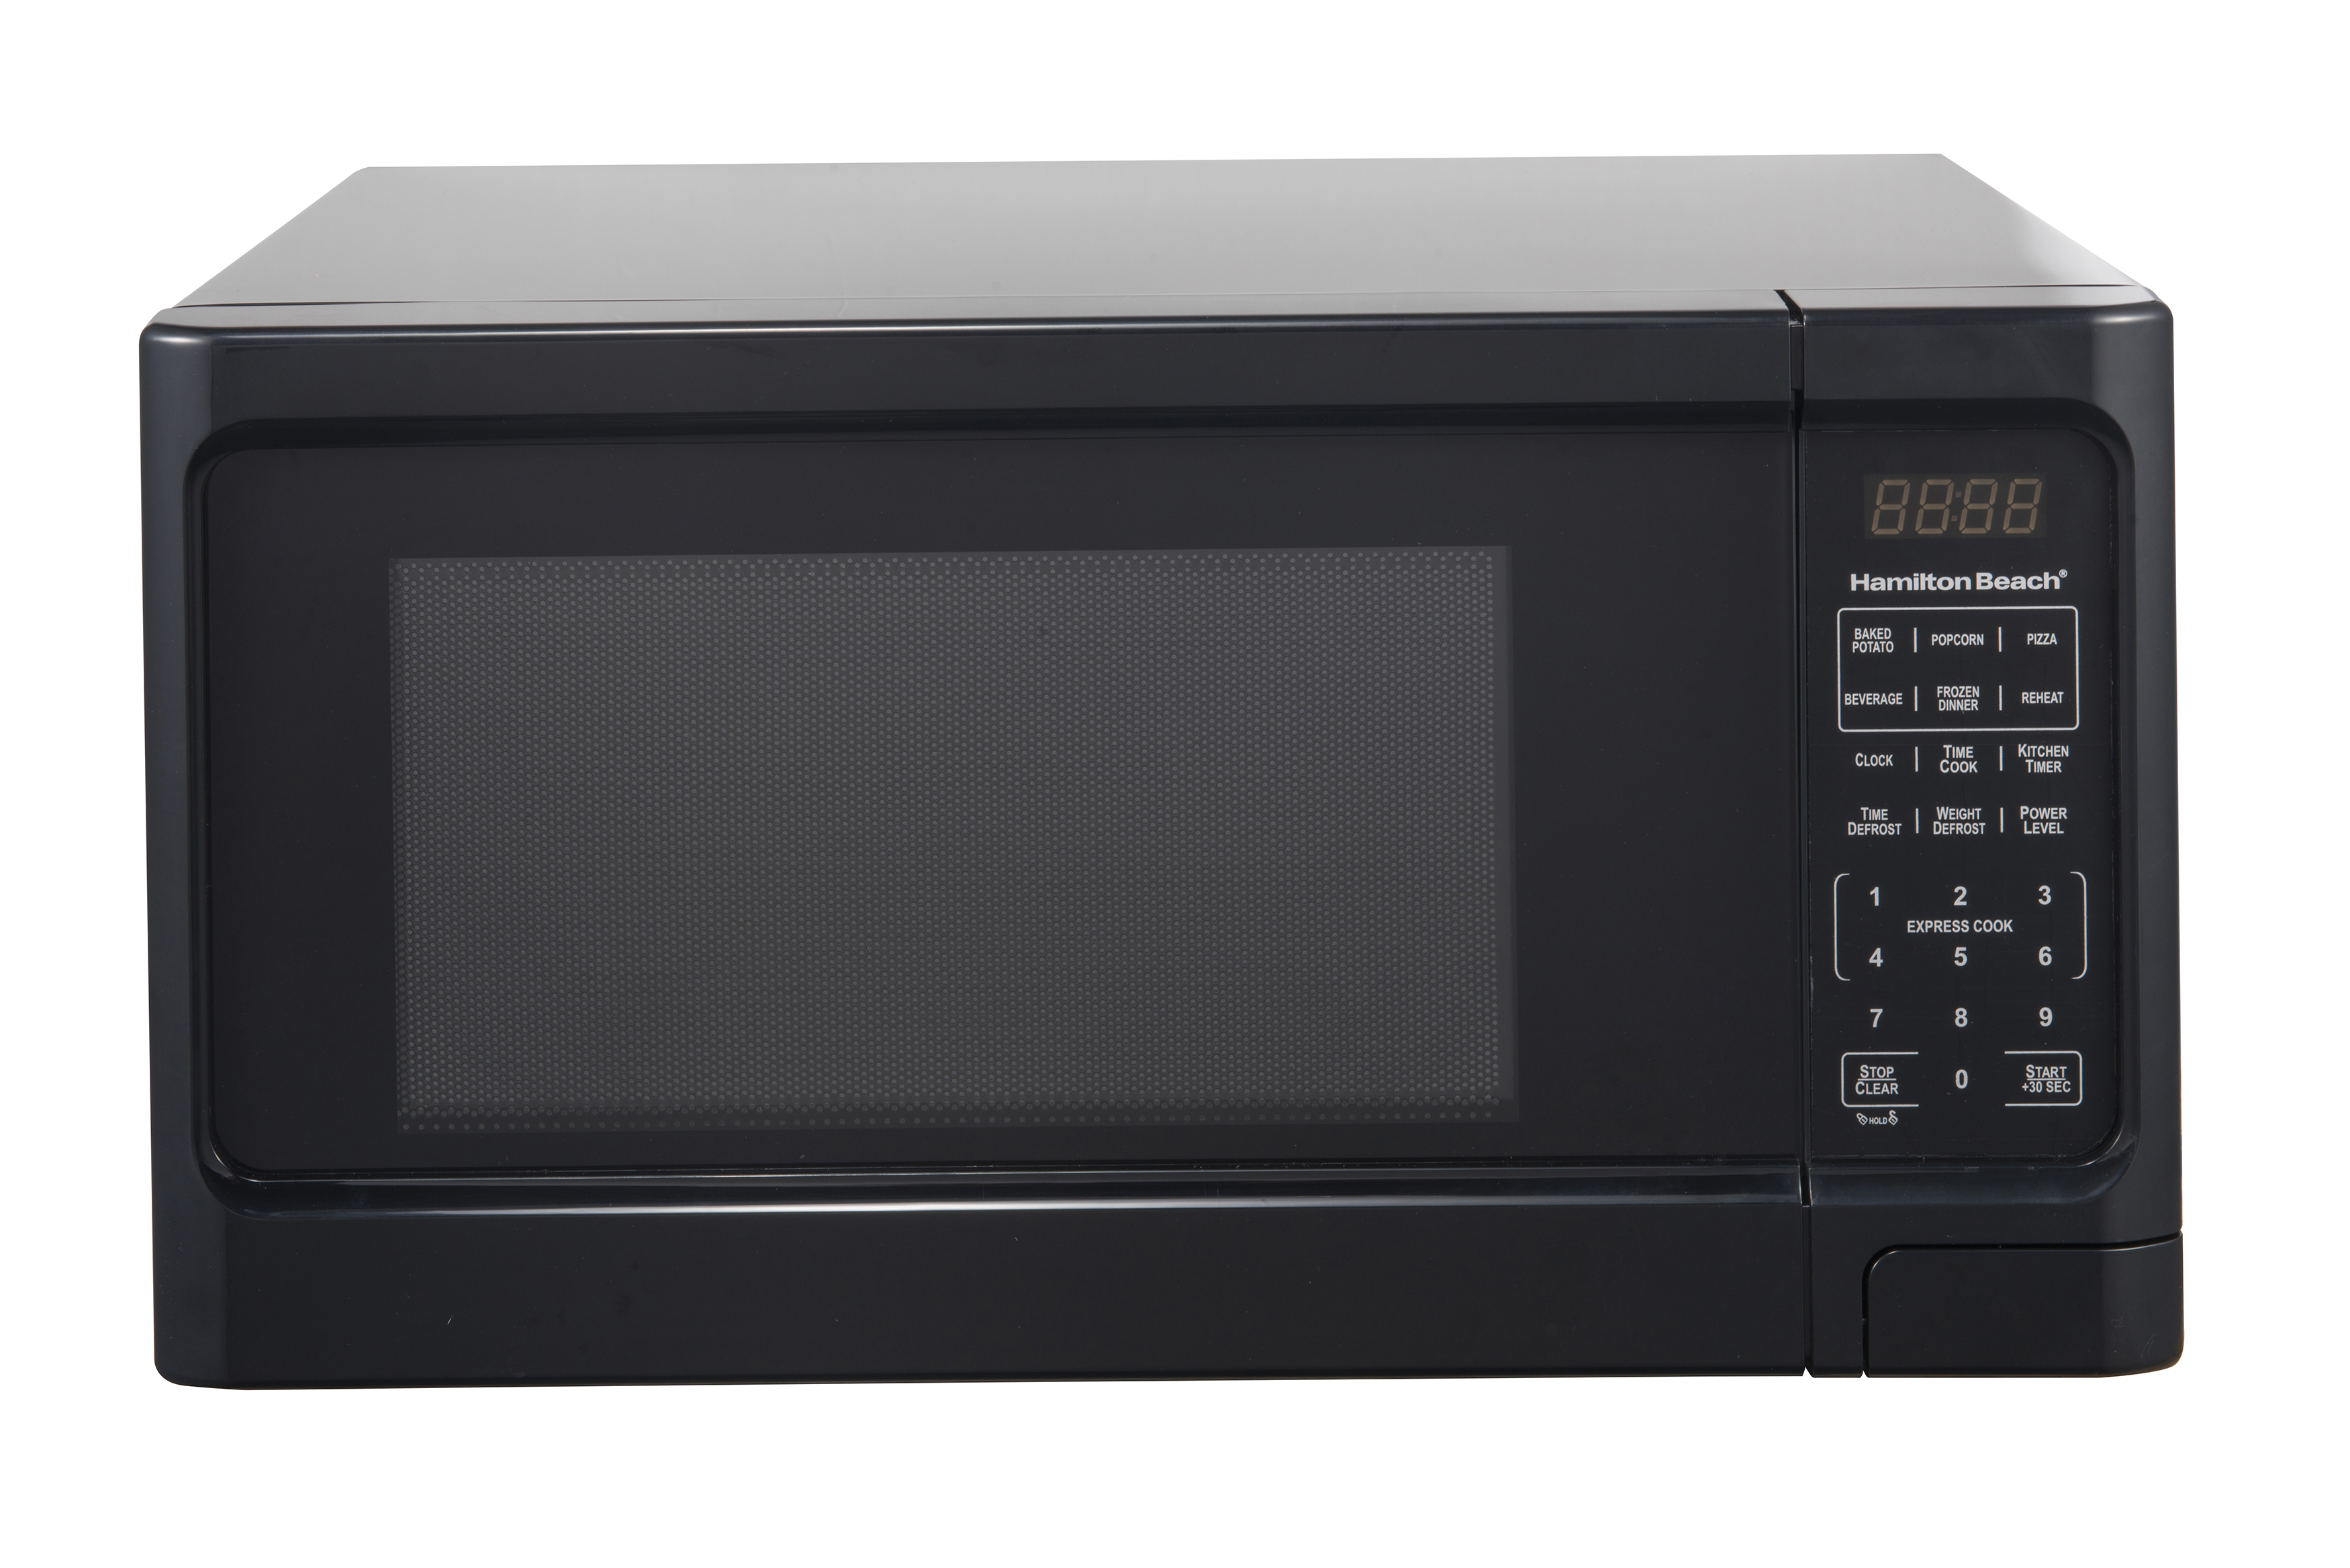 Hamilton Beach 1.1 cu. ft. Countertop Microwave Oven, 1000 Watts, Black - image 1 of 9